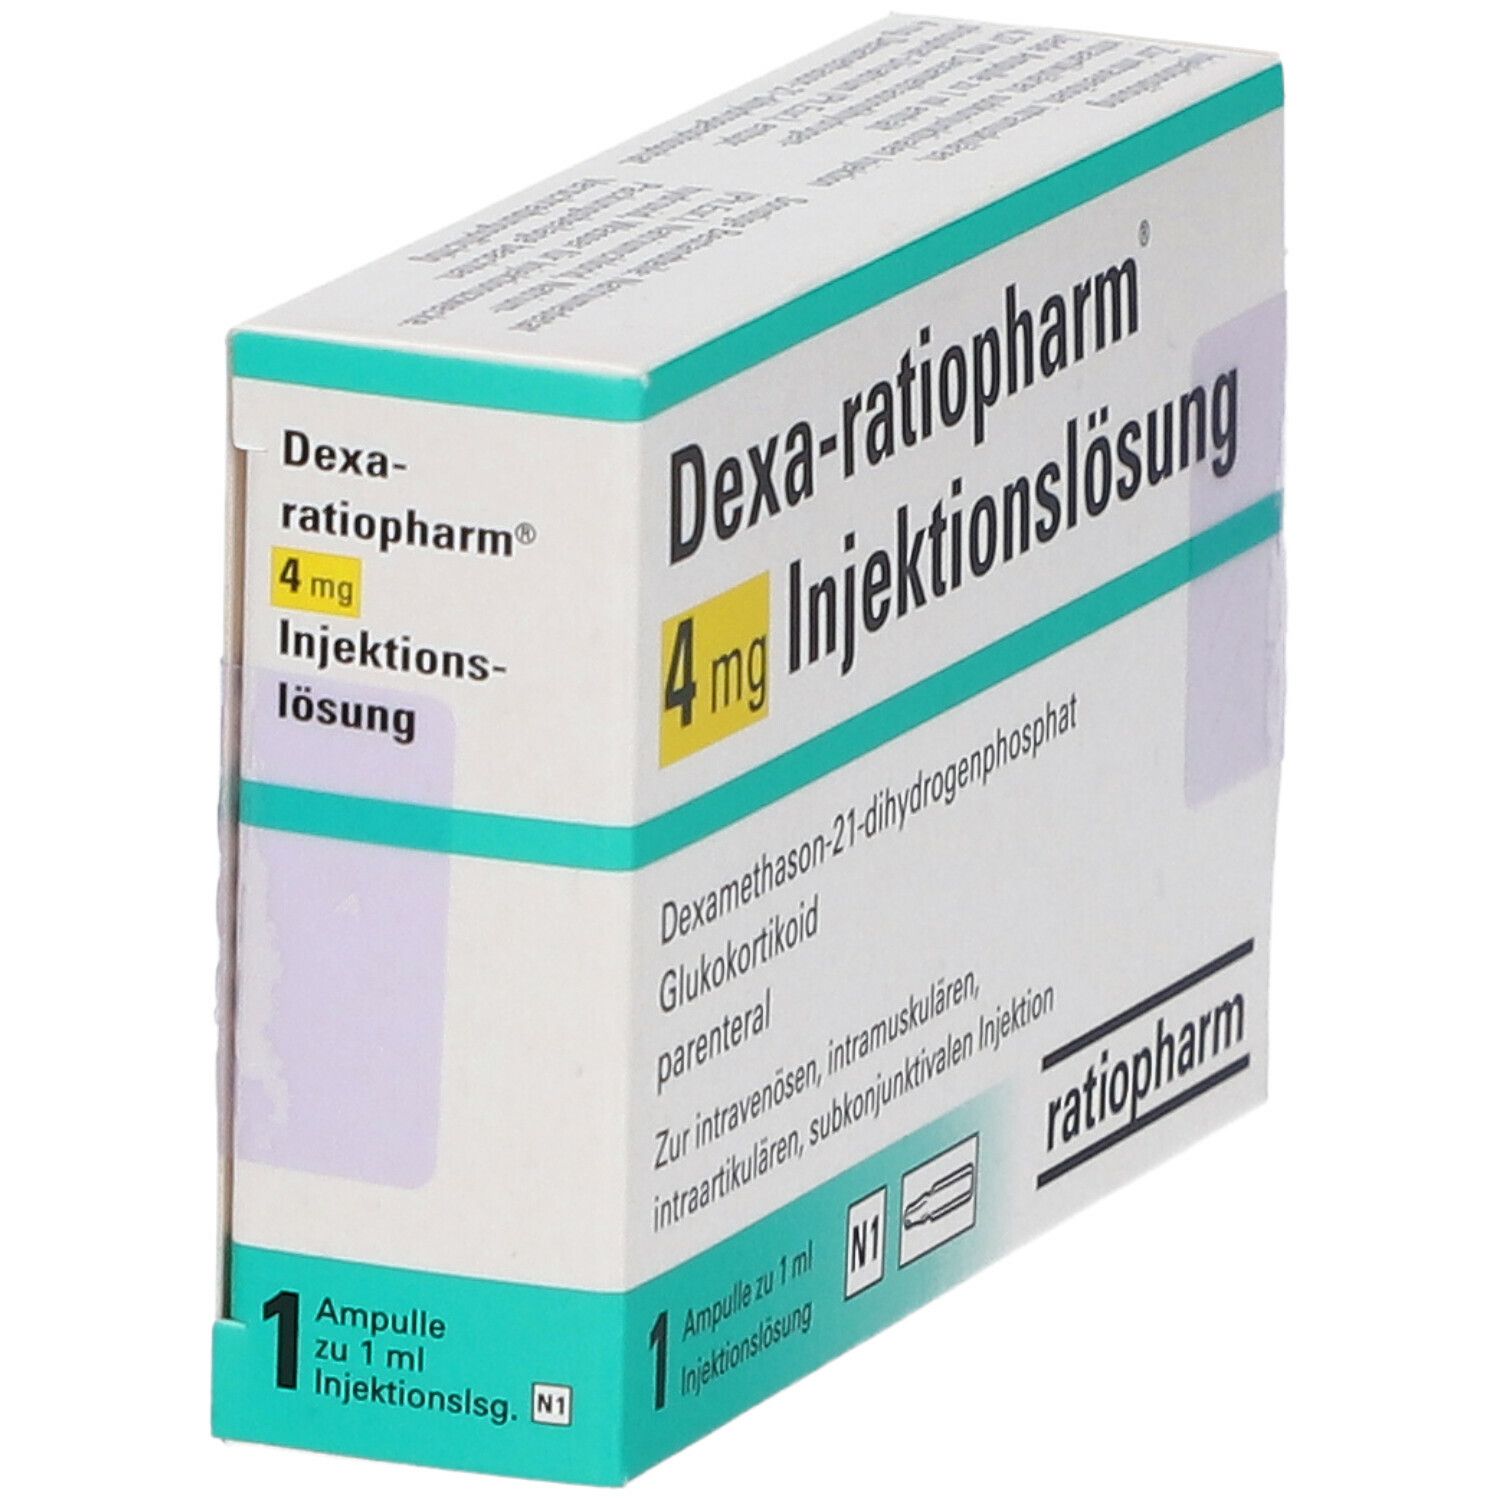 Dexa-ratiopharm® 4 mg